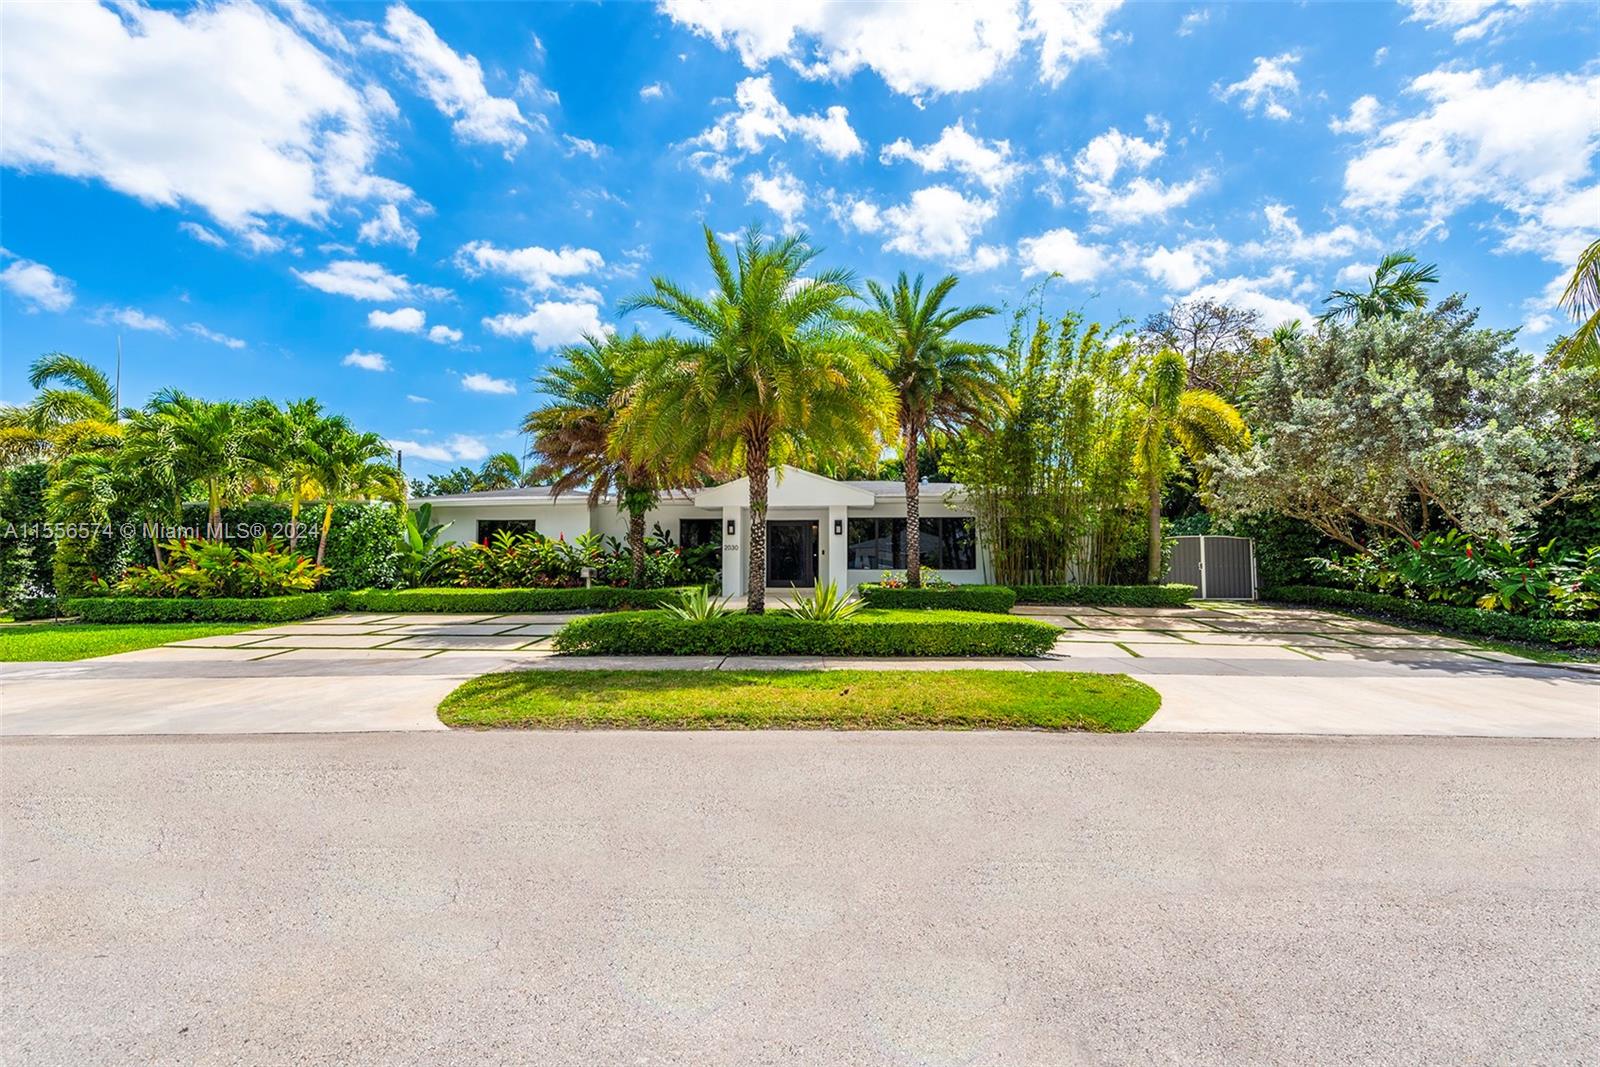 Property for Sale at 2030 Ne 186th Dr, North Miami Beach, Miami-Dade County, Florida - Bedrooms: 4 
Bathrooms: 3  - $2,195,000